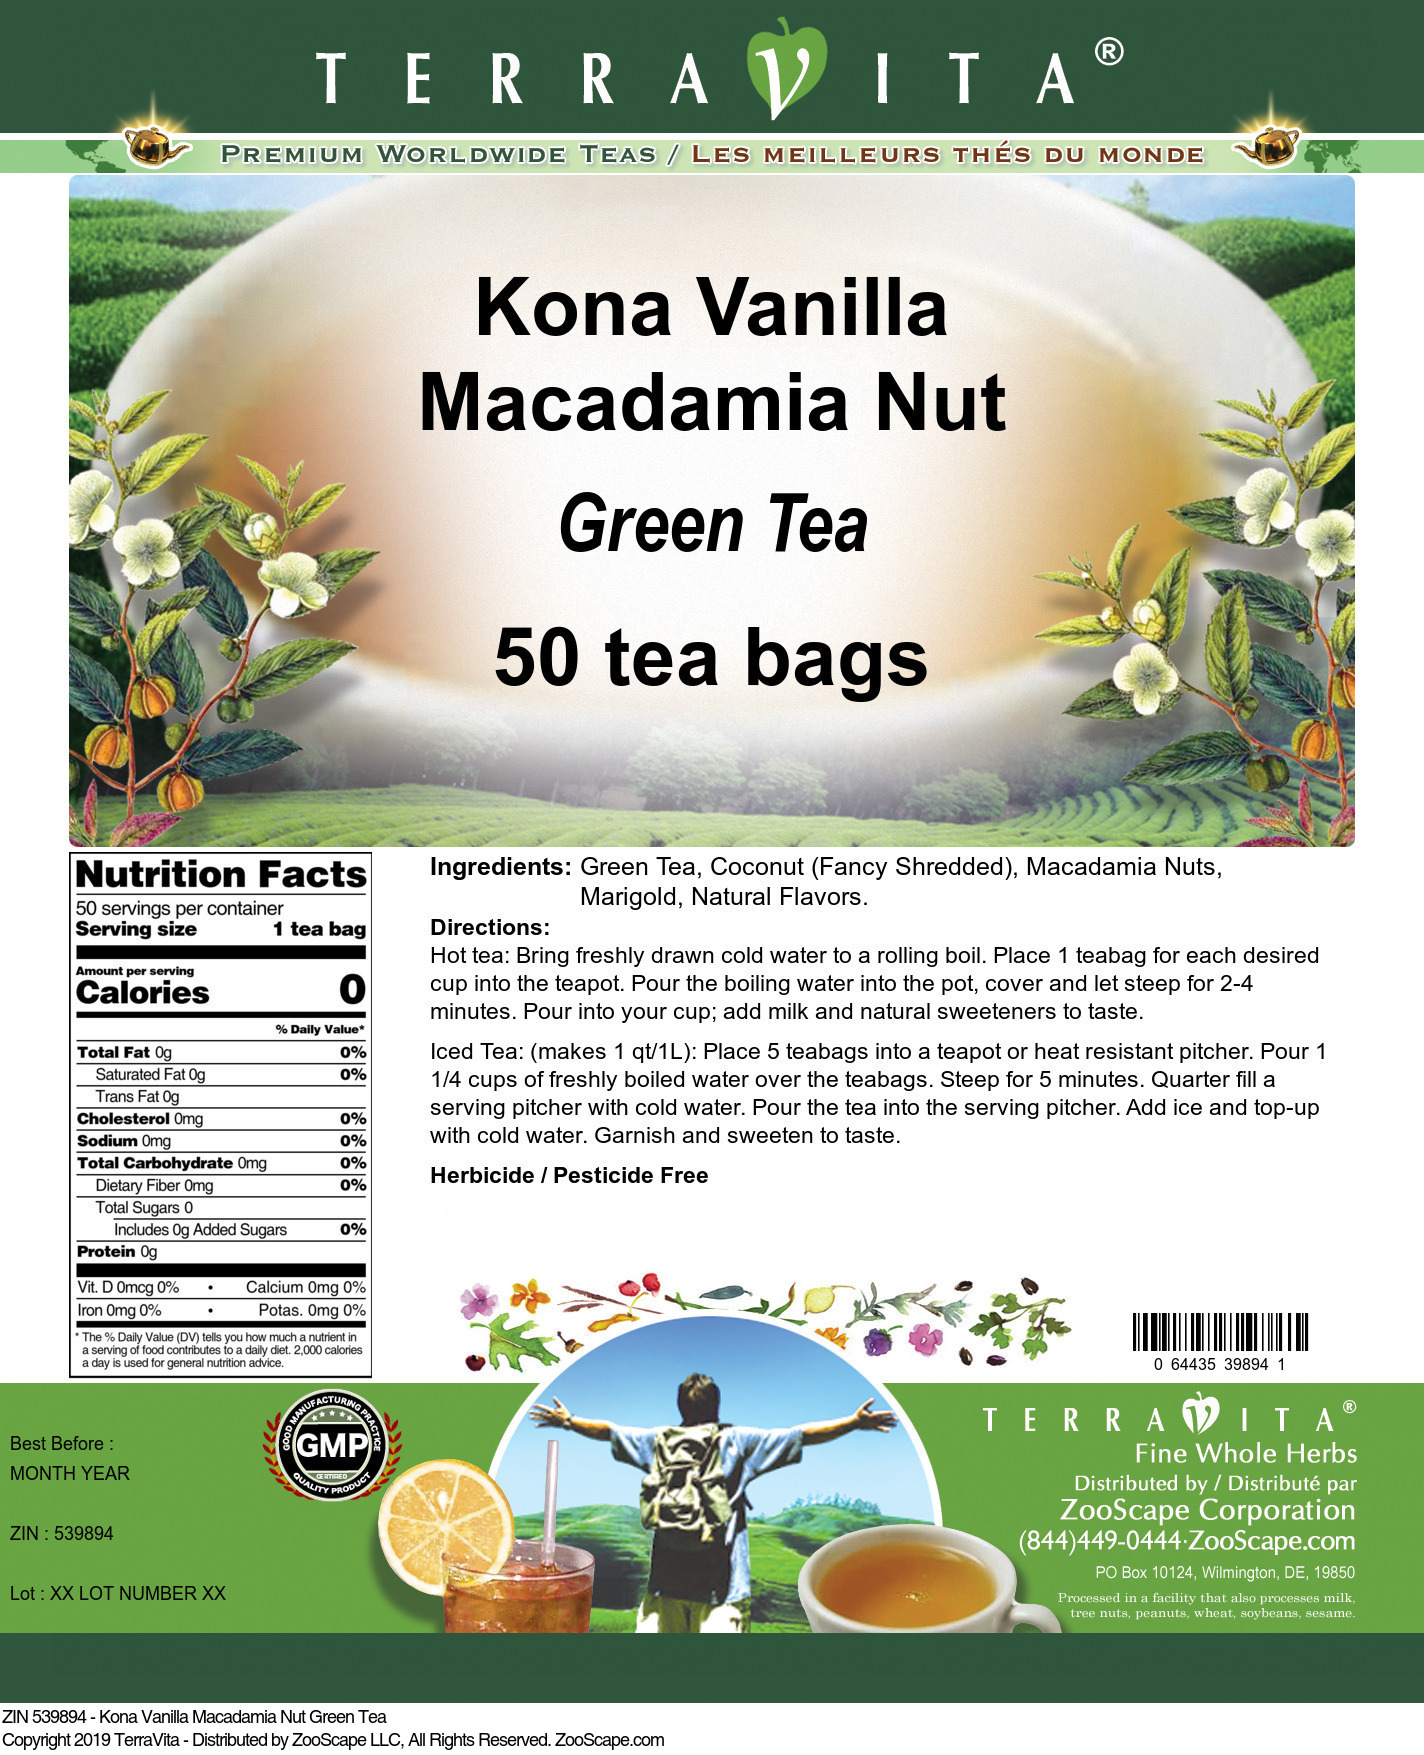 Kona Vanilla Macadamia Nut Green Tea - Label